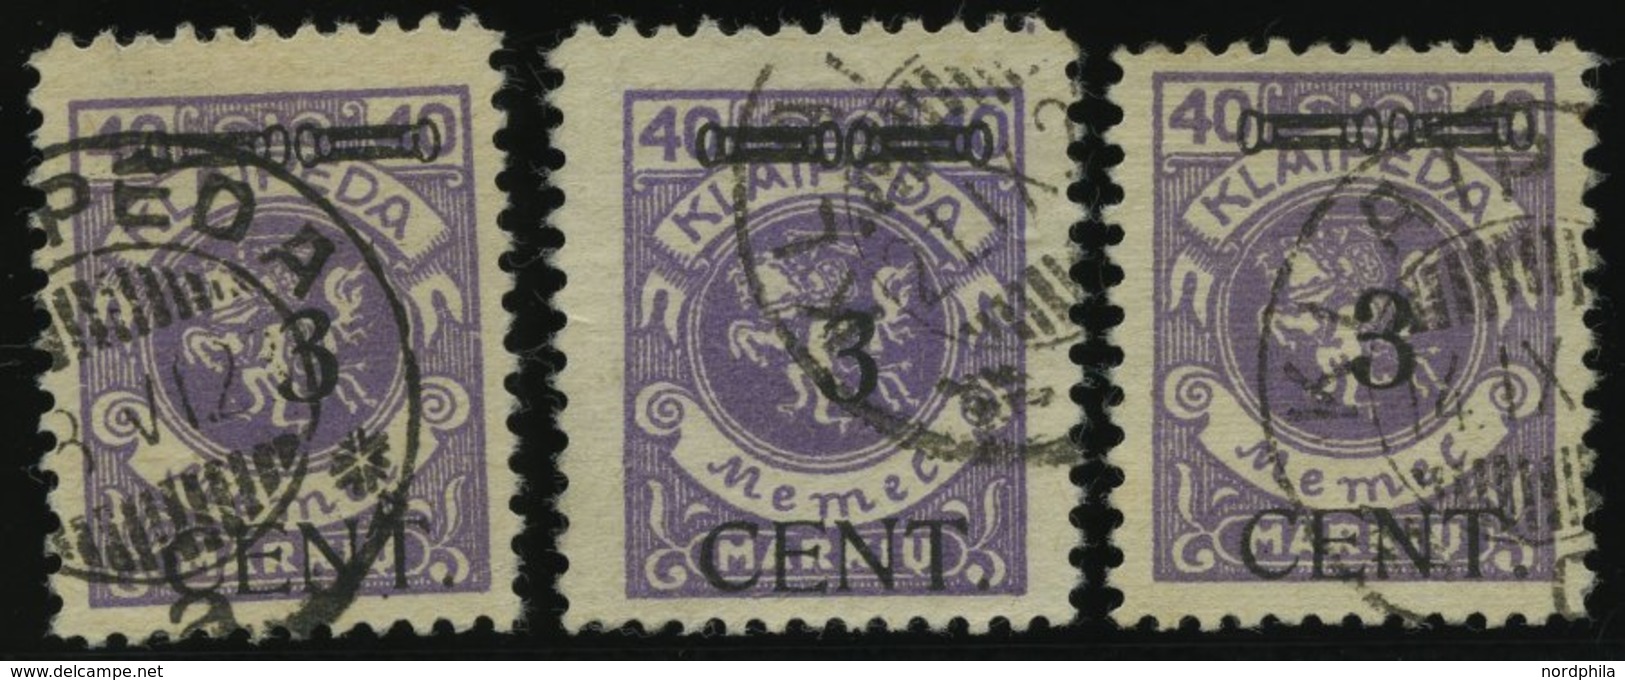 MEMELGEBIET 178I-III O, 1923, 3 C. Auf 40 M. Lebhaftgrauviolett, Type I-III, 3 Prachtwerte, Gepr. Huylmans - Memel (Klaipeda) 1923